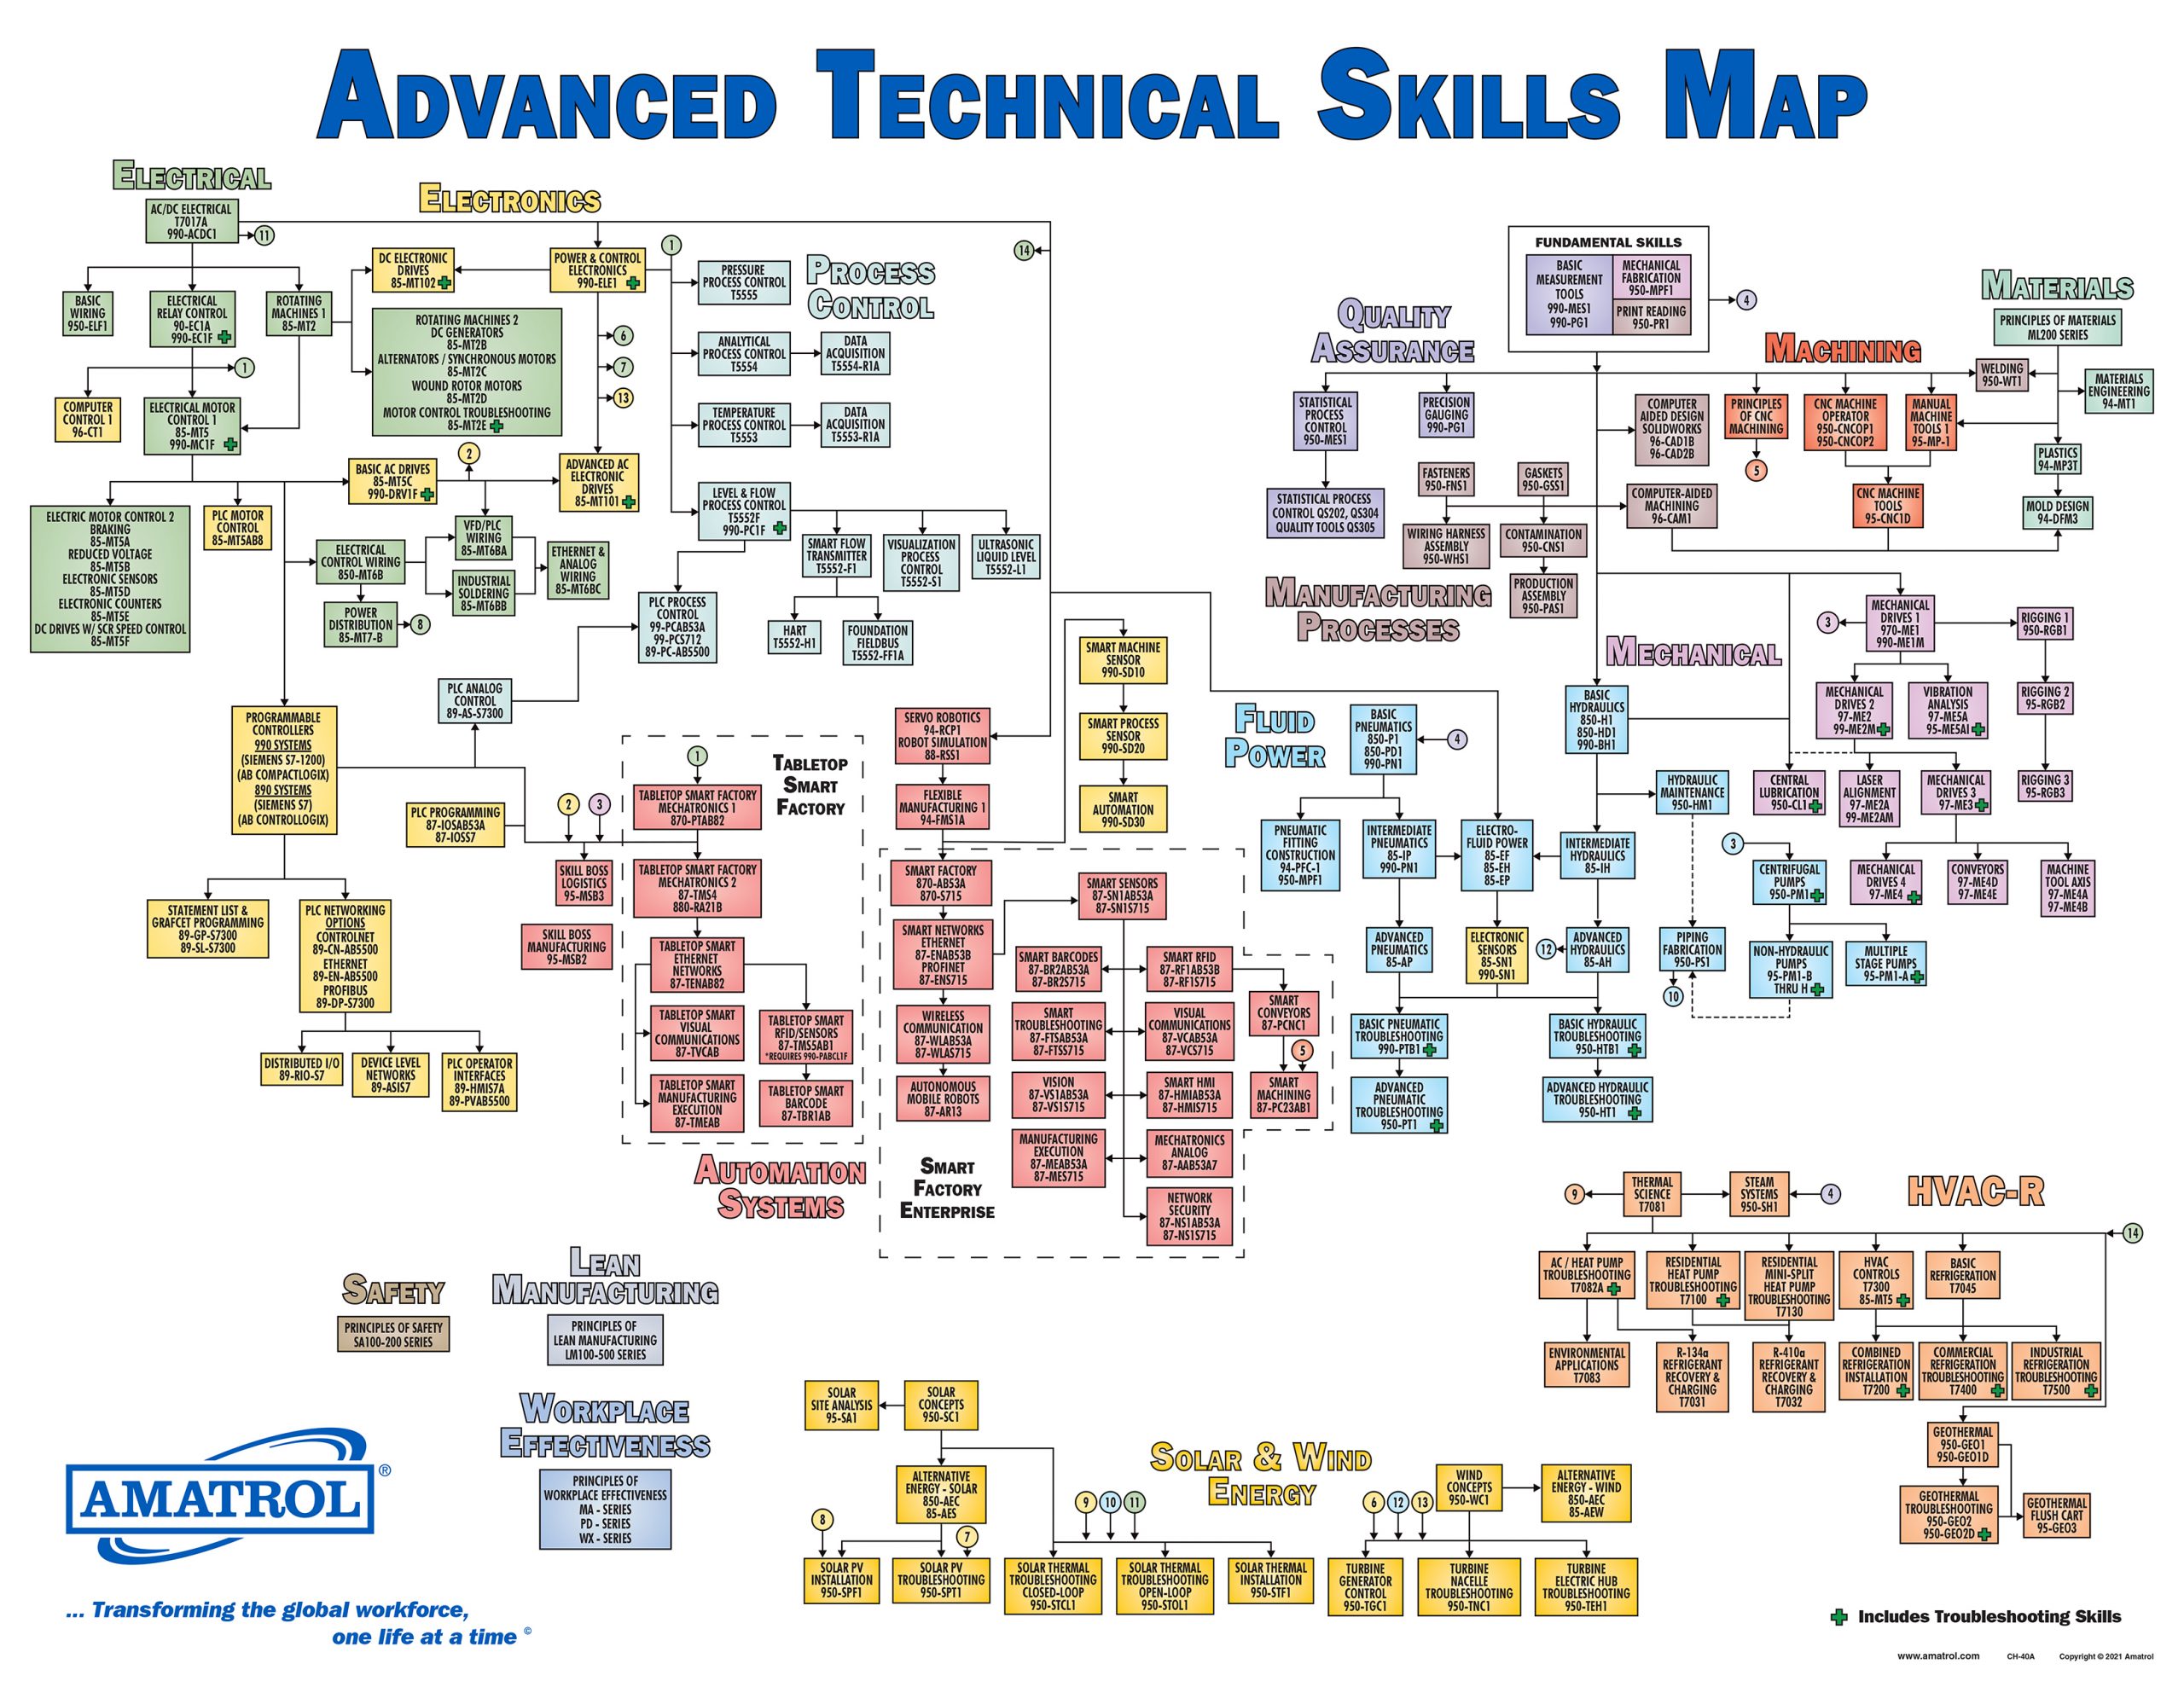 Amatrol's Advanced Technical Skills Map